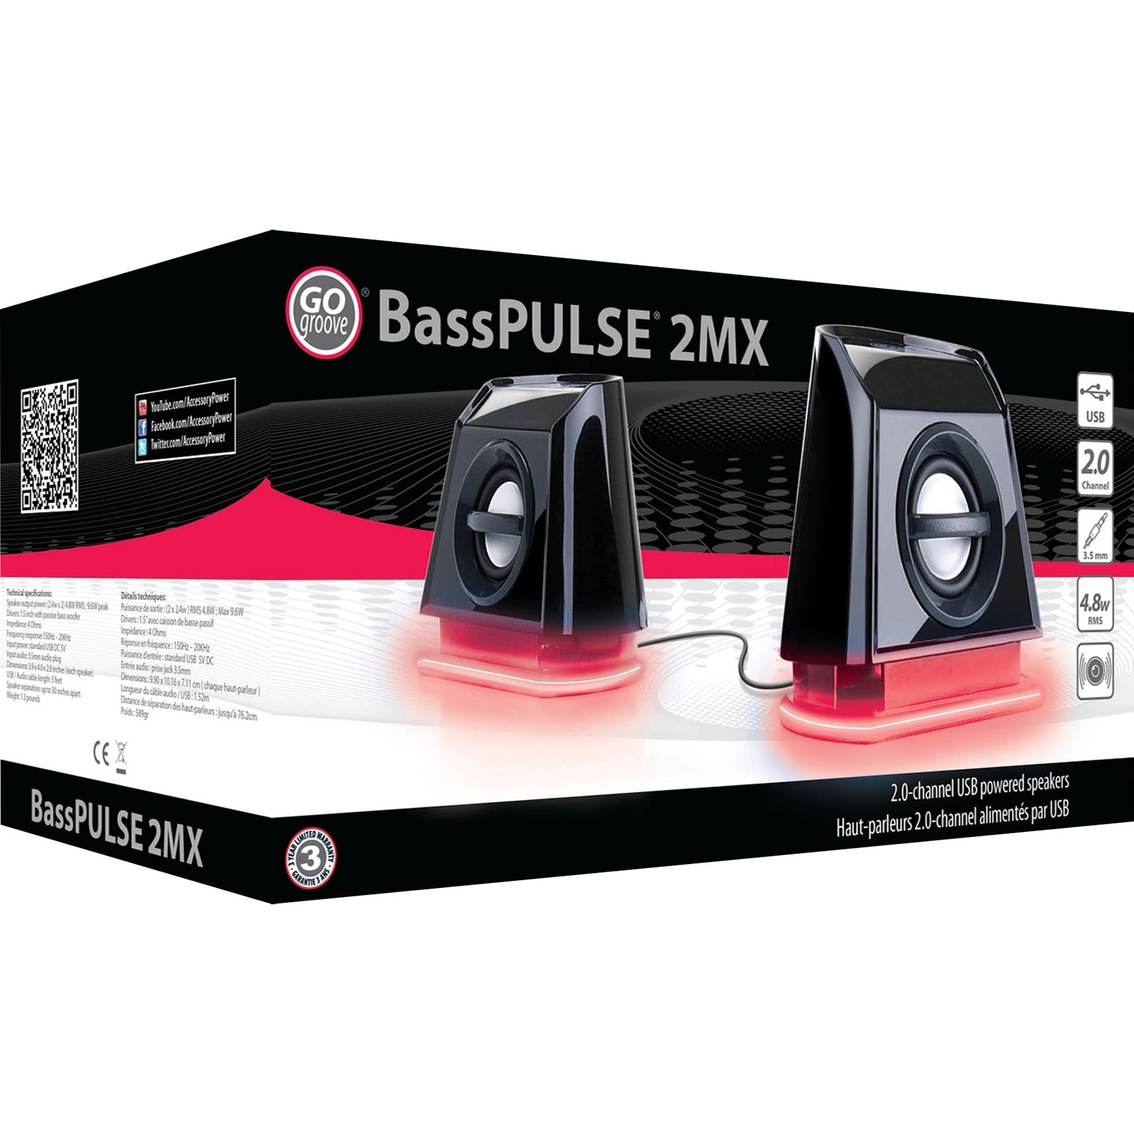 GOgroove BassPULSE 2MX USB Computer Speakers - Image 4 of 4